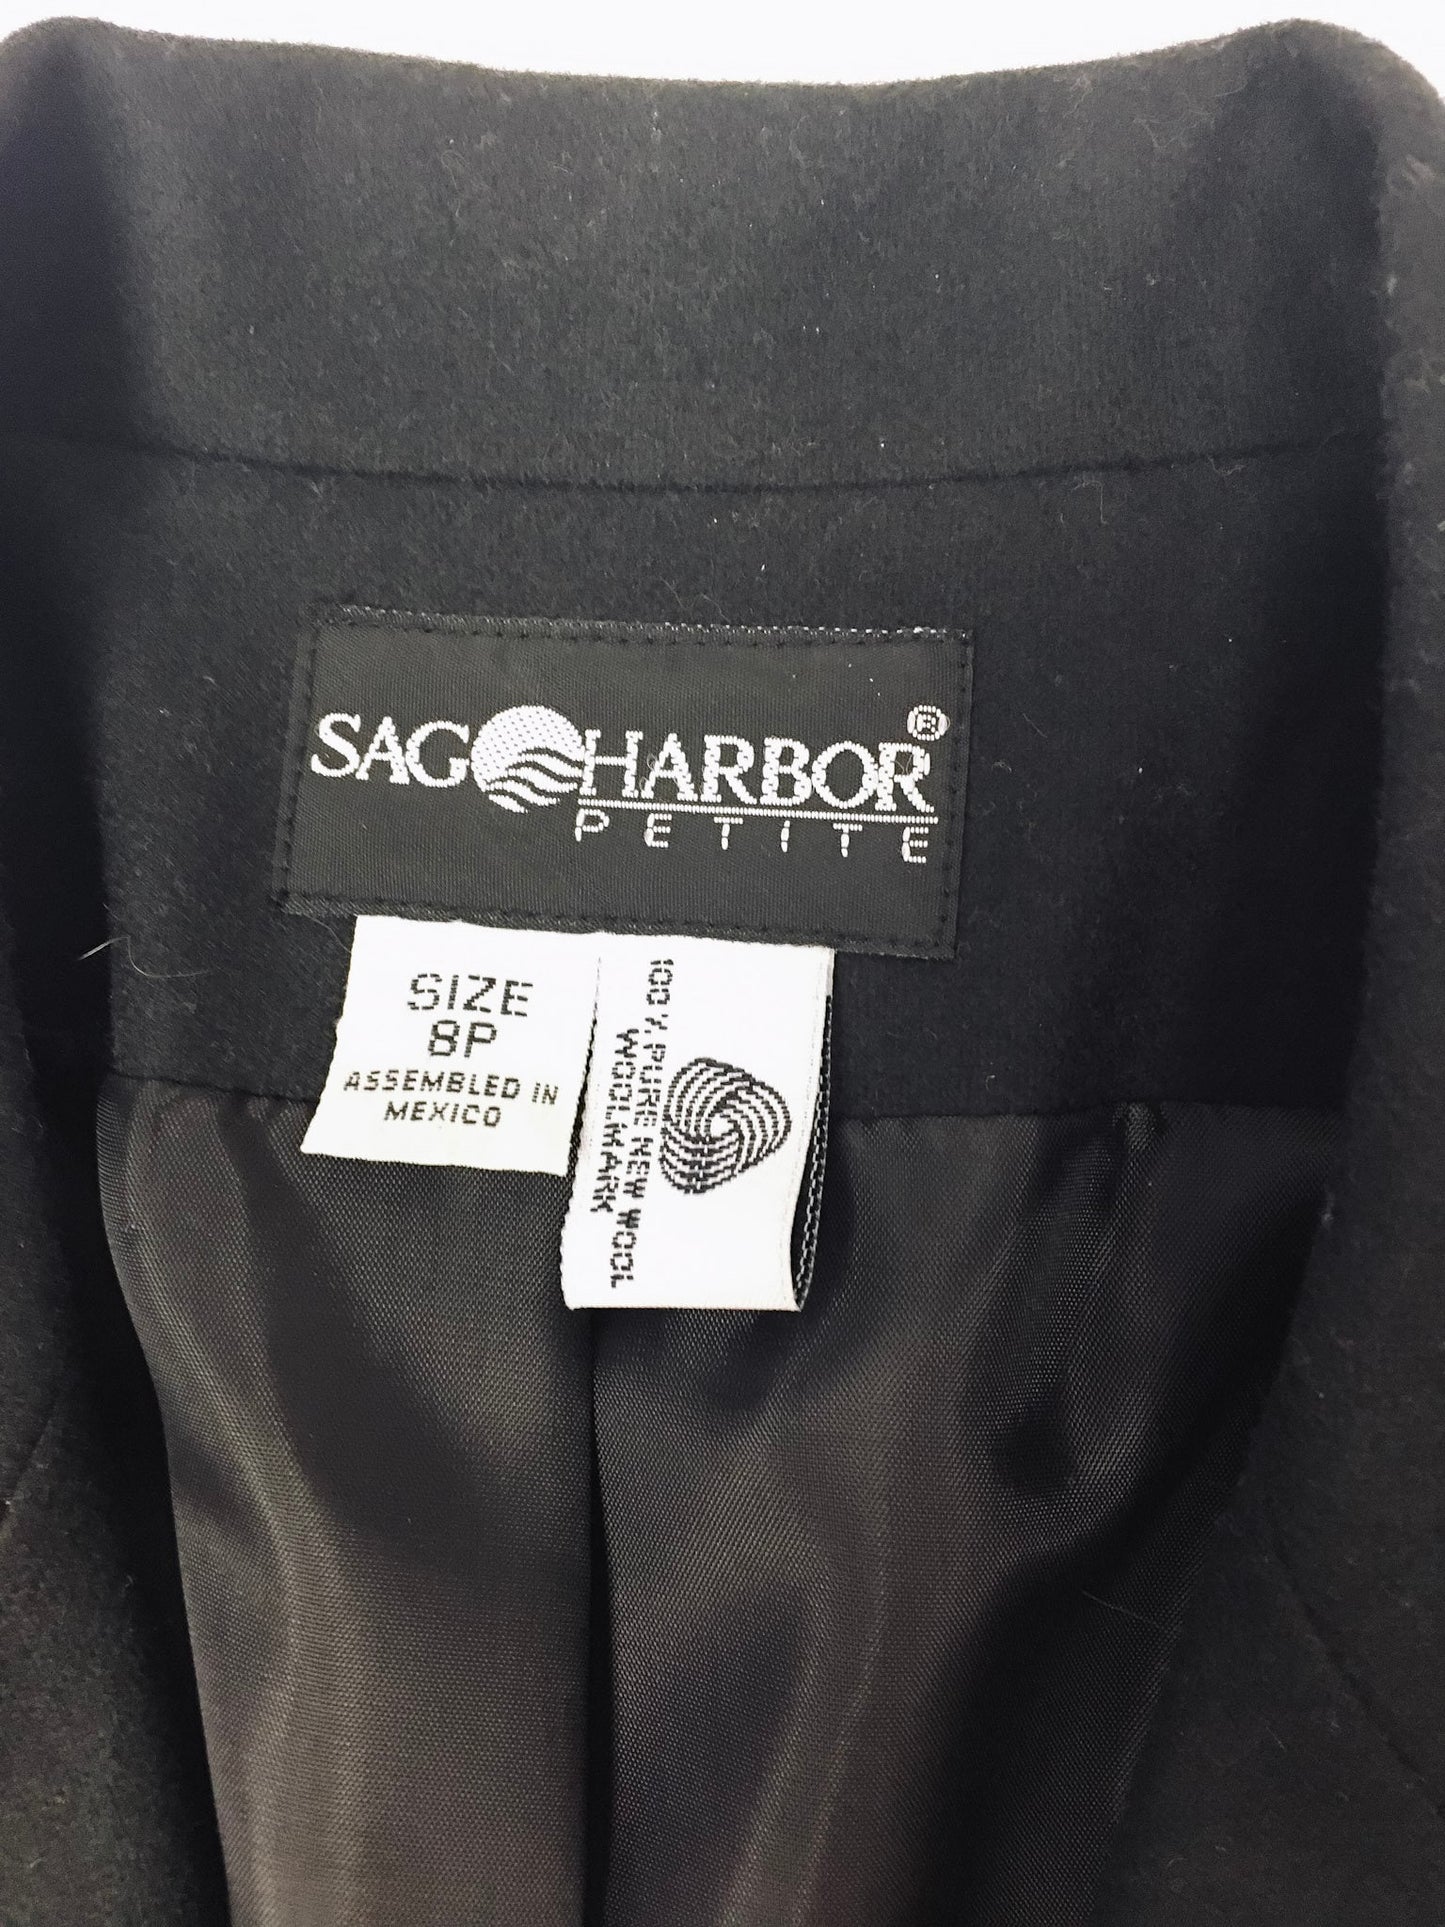 Vintage Wool Sag Harbor Petite Women's Black Blazar/Sports Coat, sz. 8p